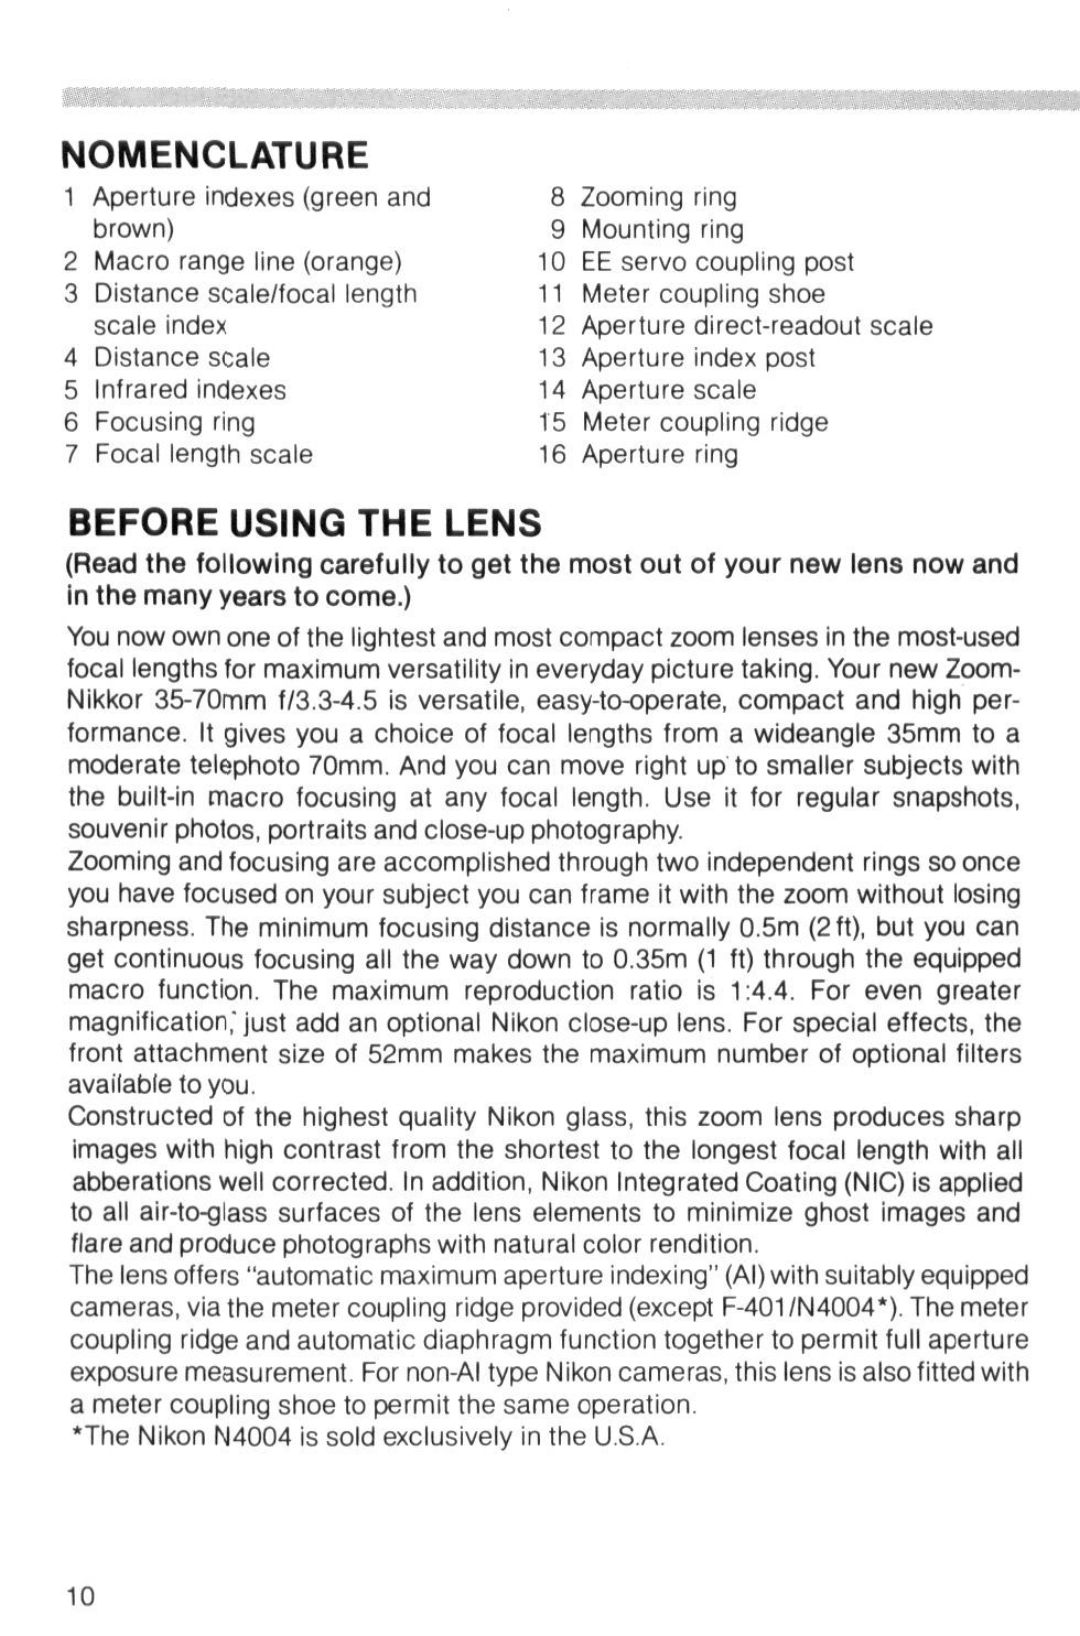 Nikon instruction manual Nomenclature, Before Using The Lens 